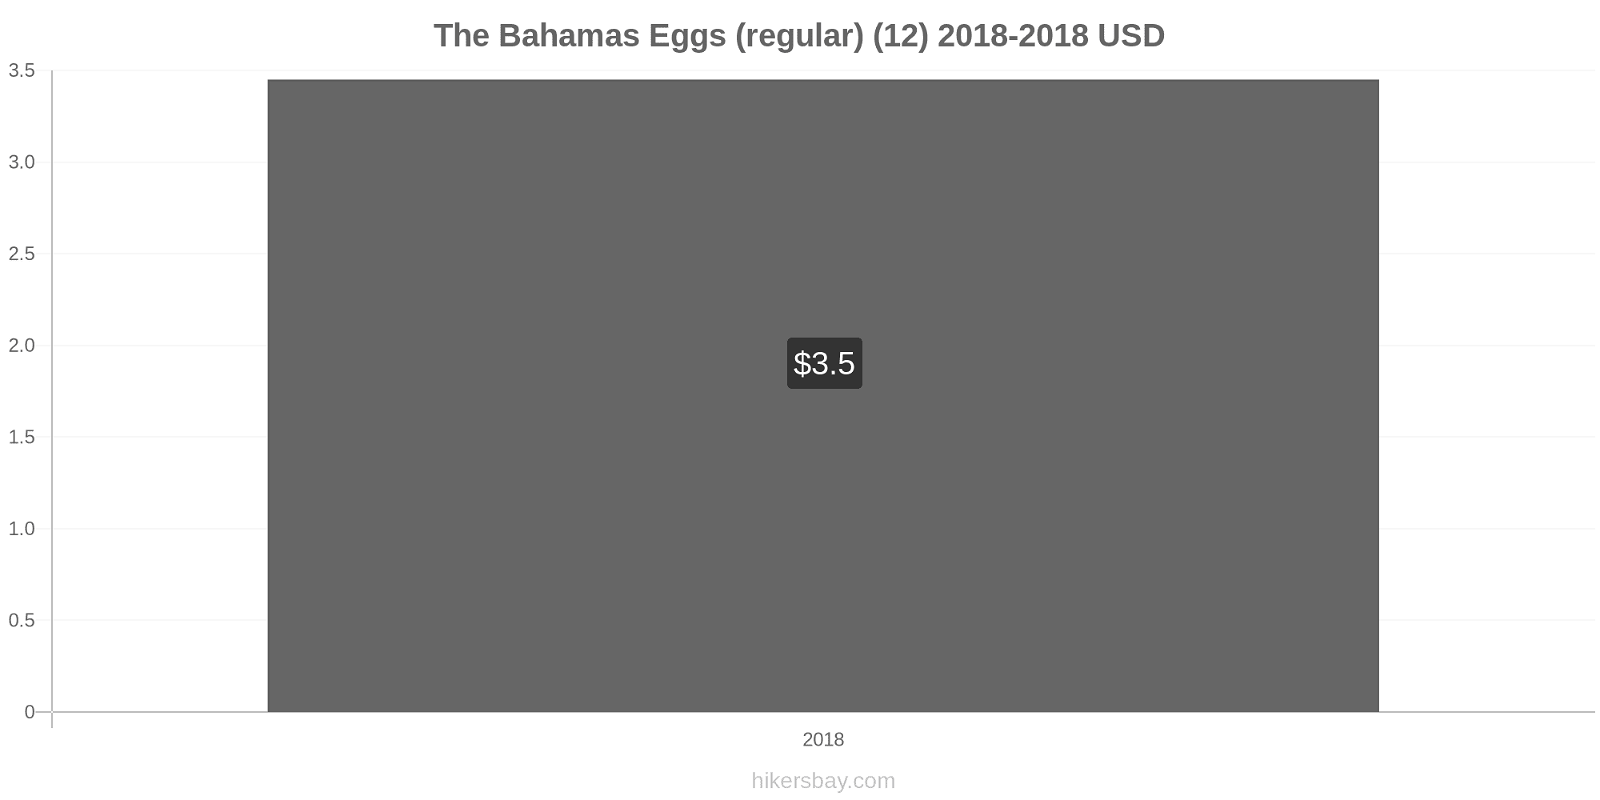 The Bahamas price changes Eggs (regular) (12) hikersbay.com